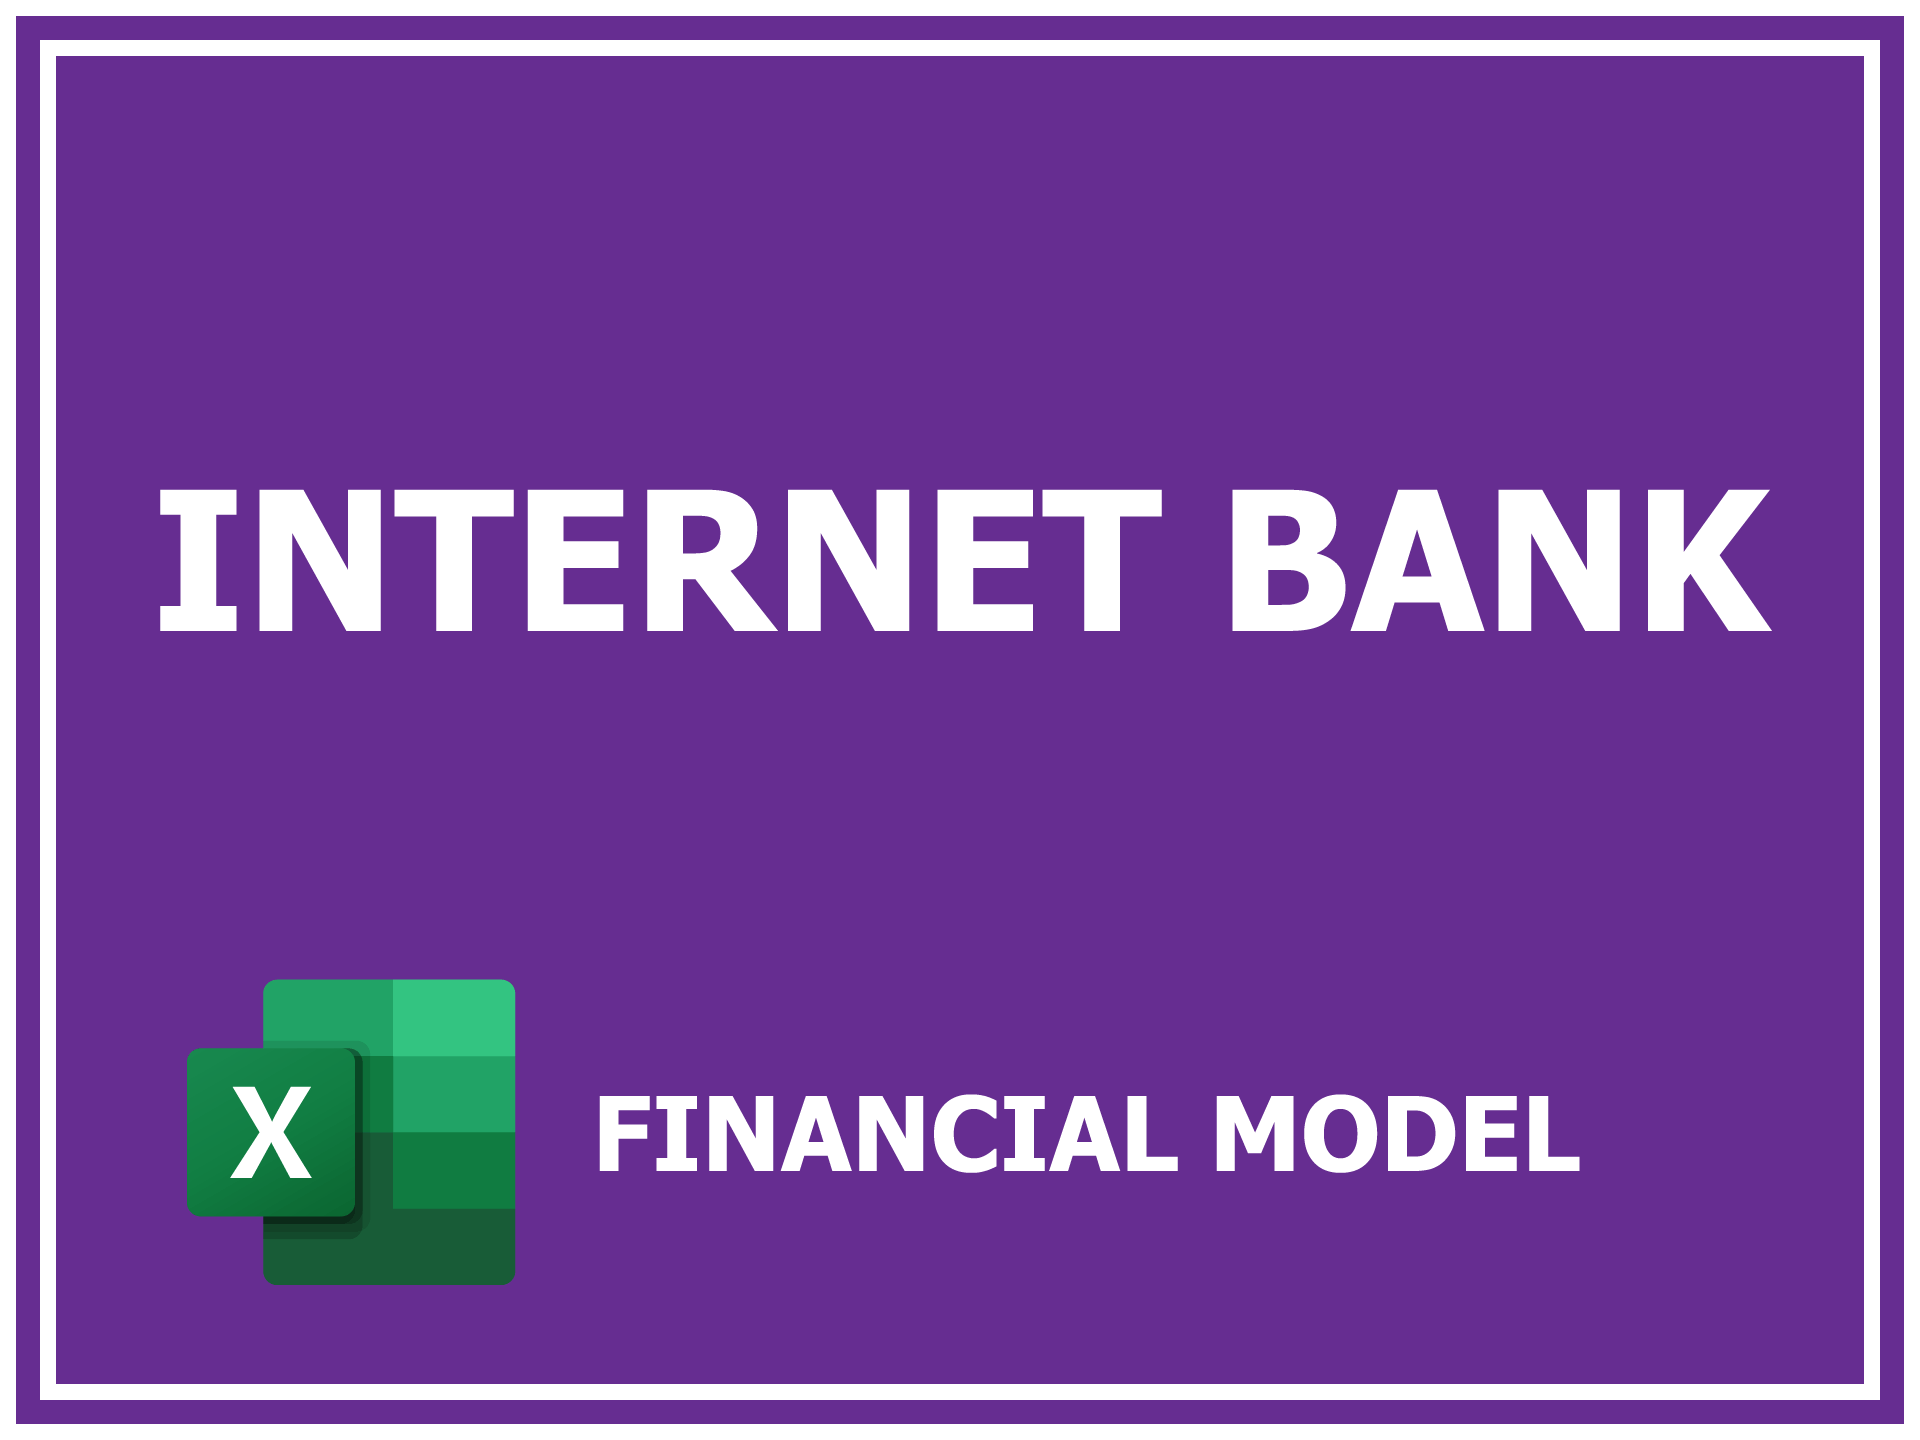 Internet Bank